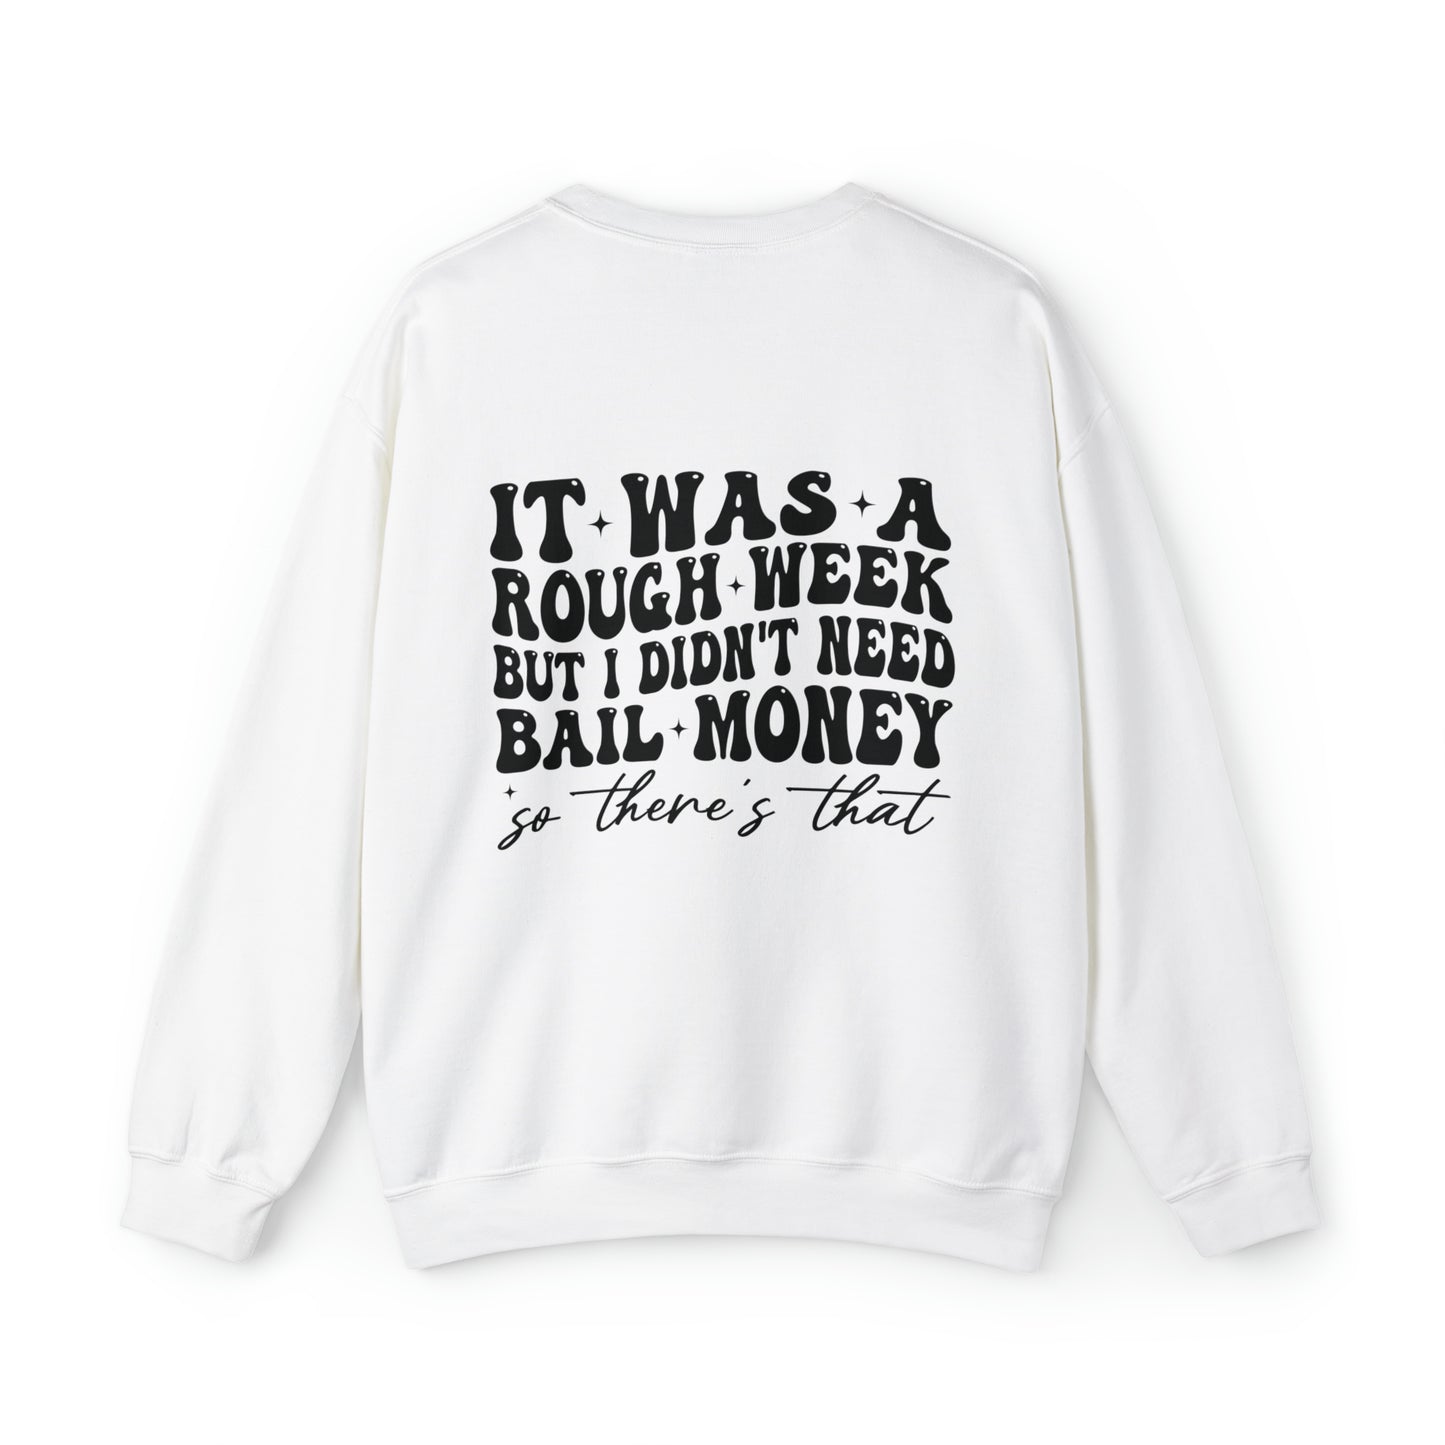 Didn't Need Bail Money Double Sided Sweatshirt